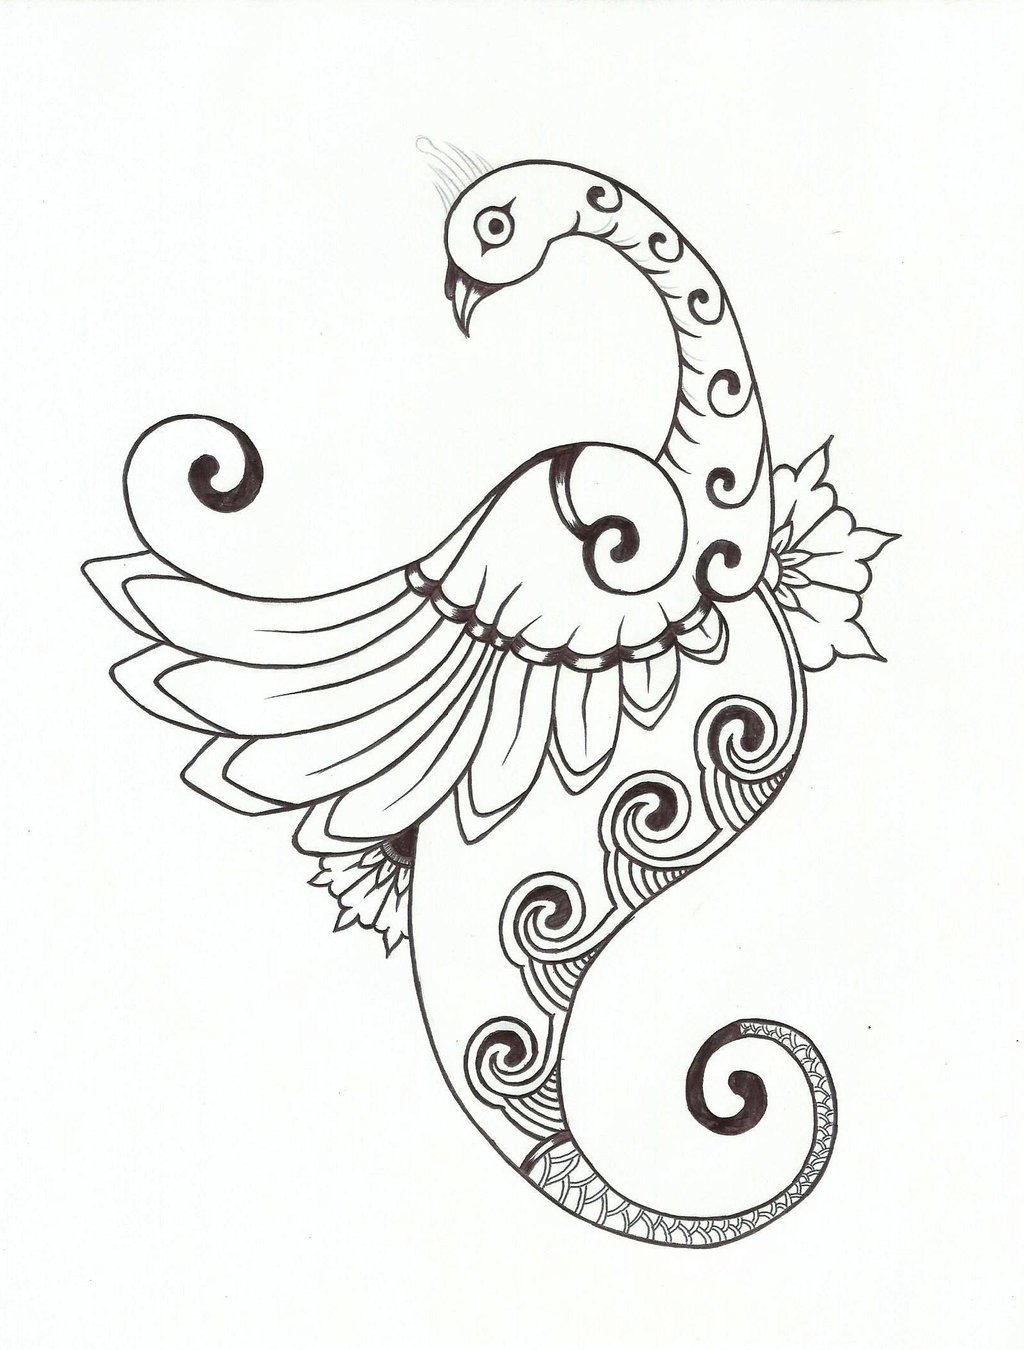 Mehndi type peacock tattoo design by Chris Metal Freak